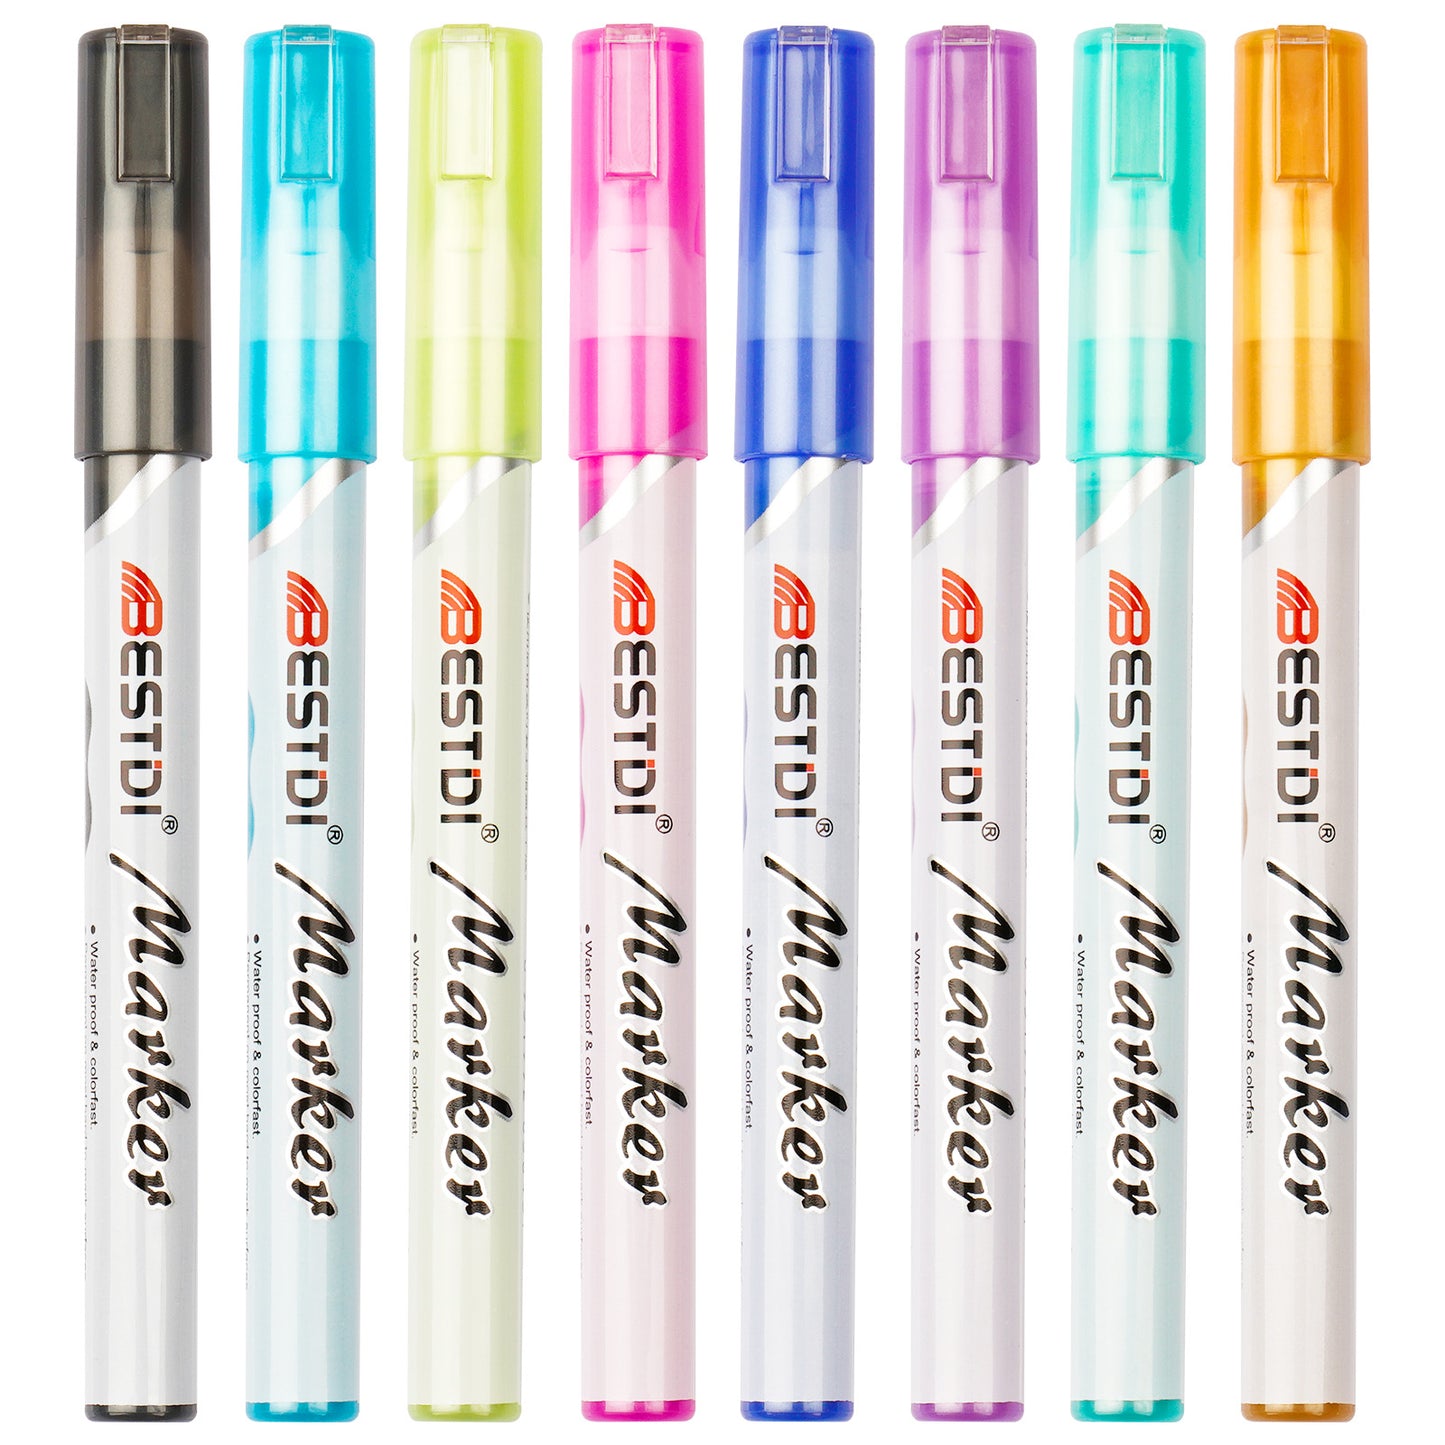 Super Squiggles Self-outline Marker Pens,Outline Metallic Pen Double Line Marker